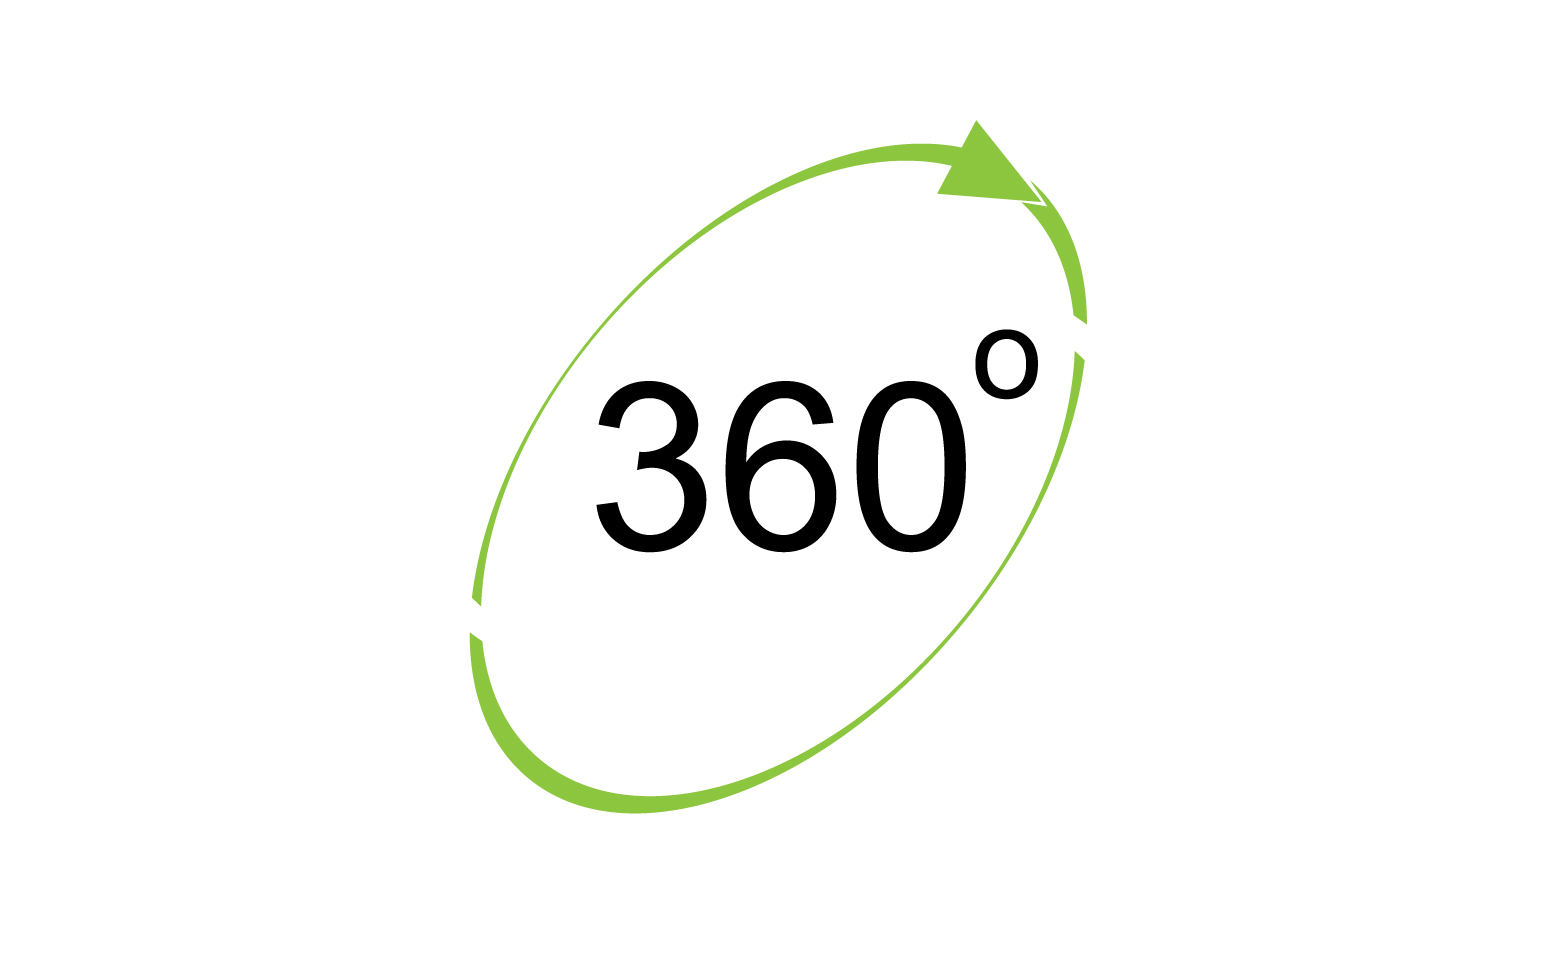 360 degree angle rotation icon symbol logo version v18